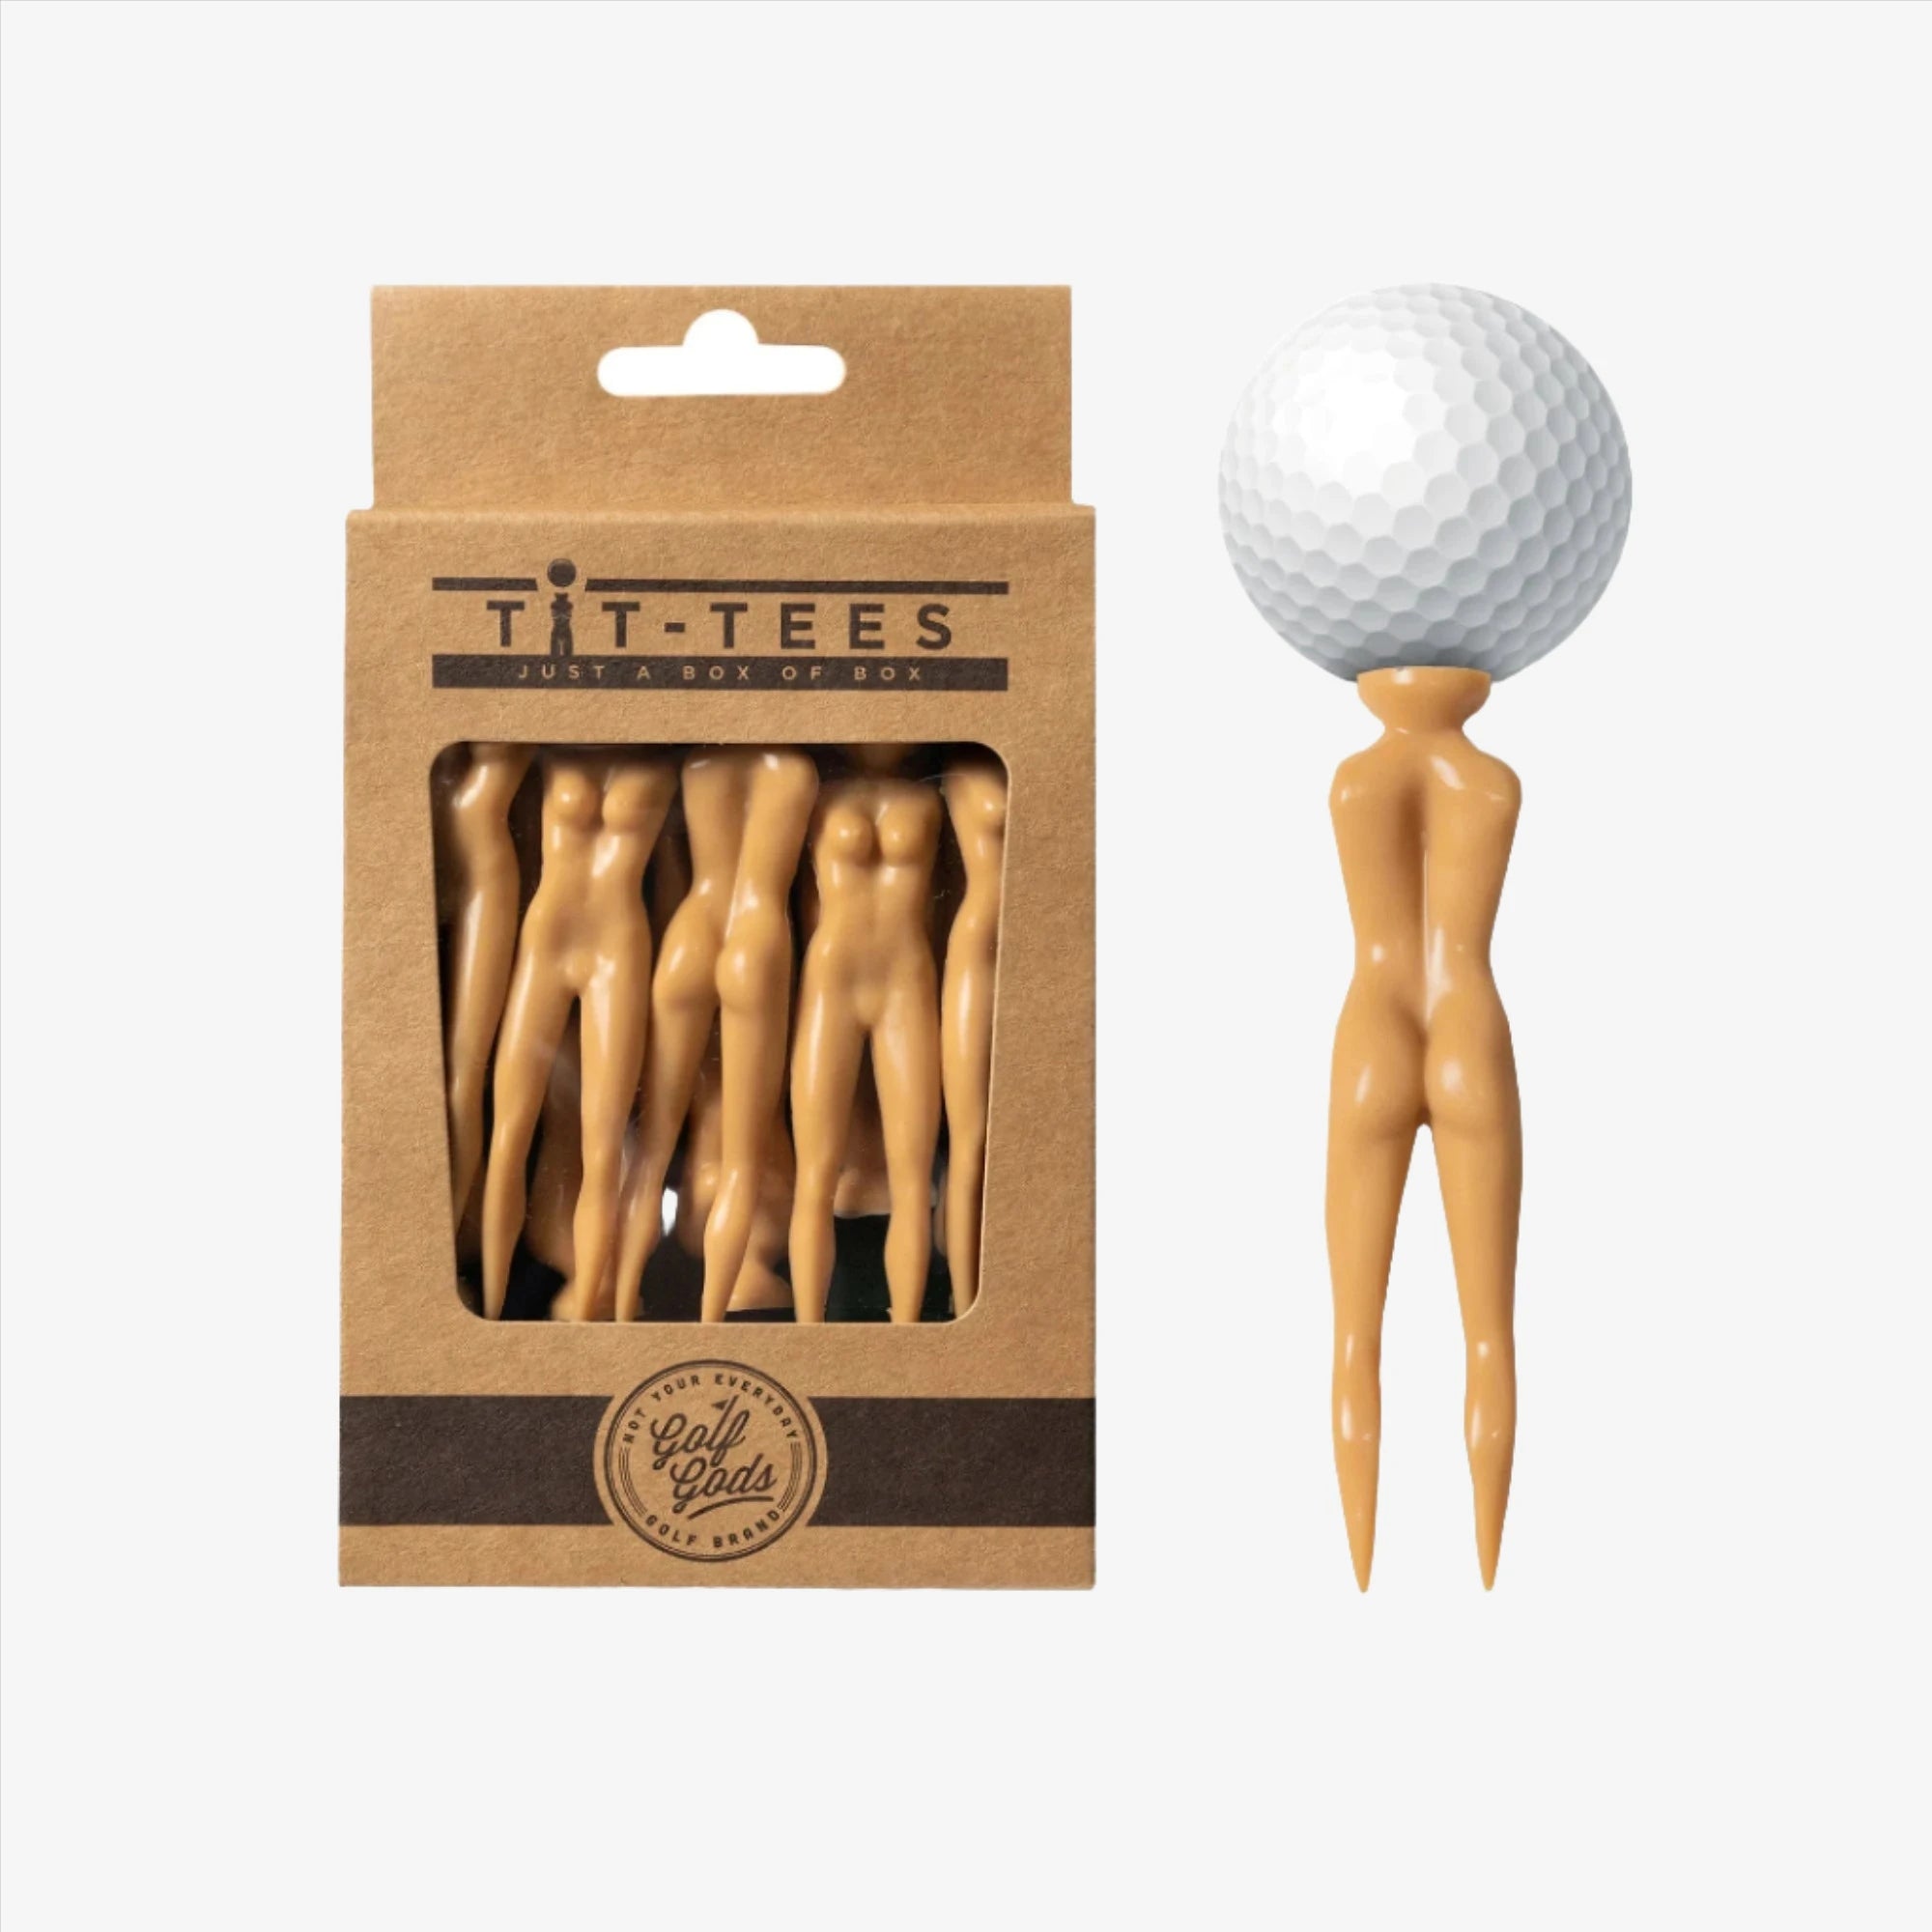 Golf Tit-Tees